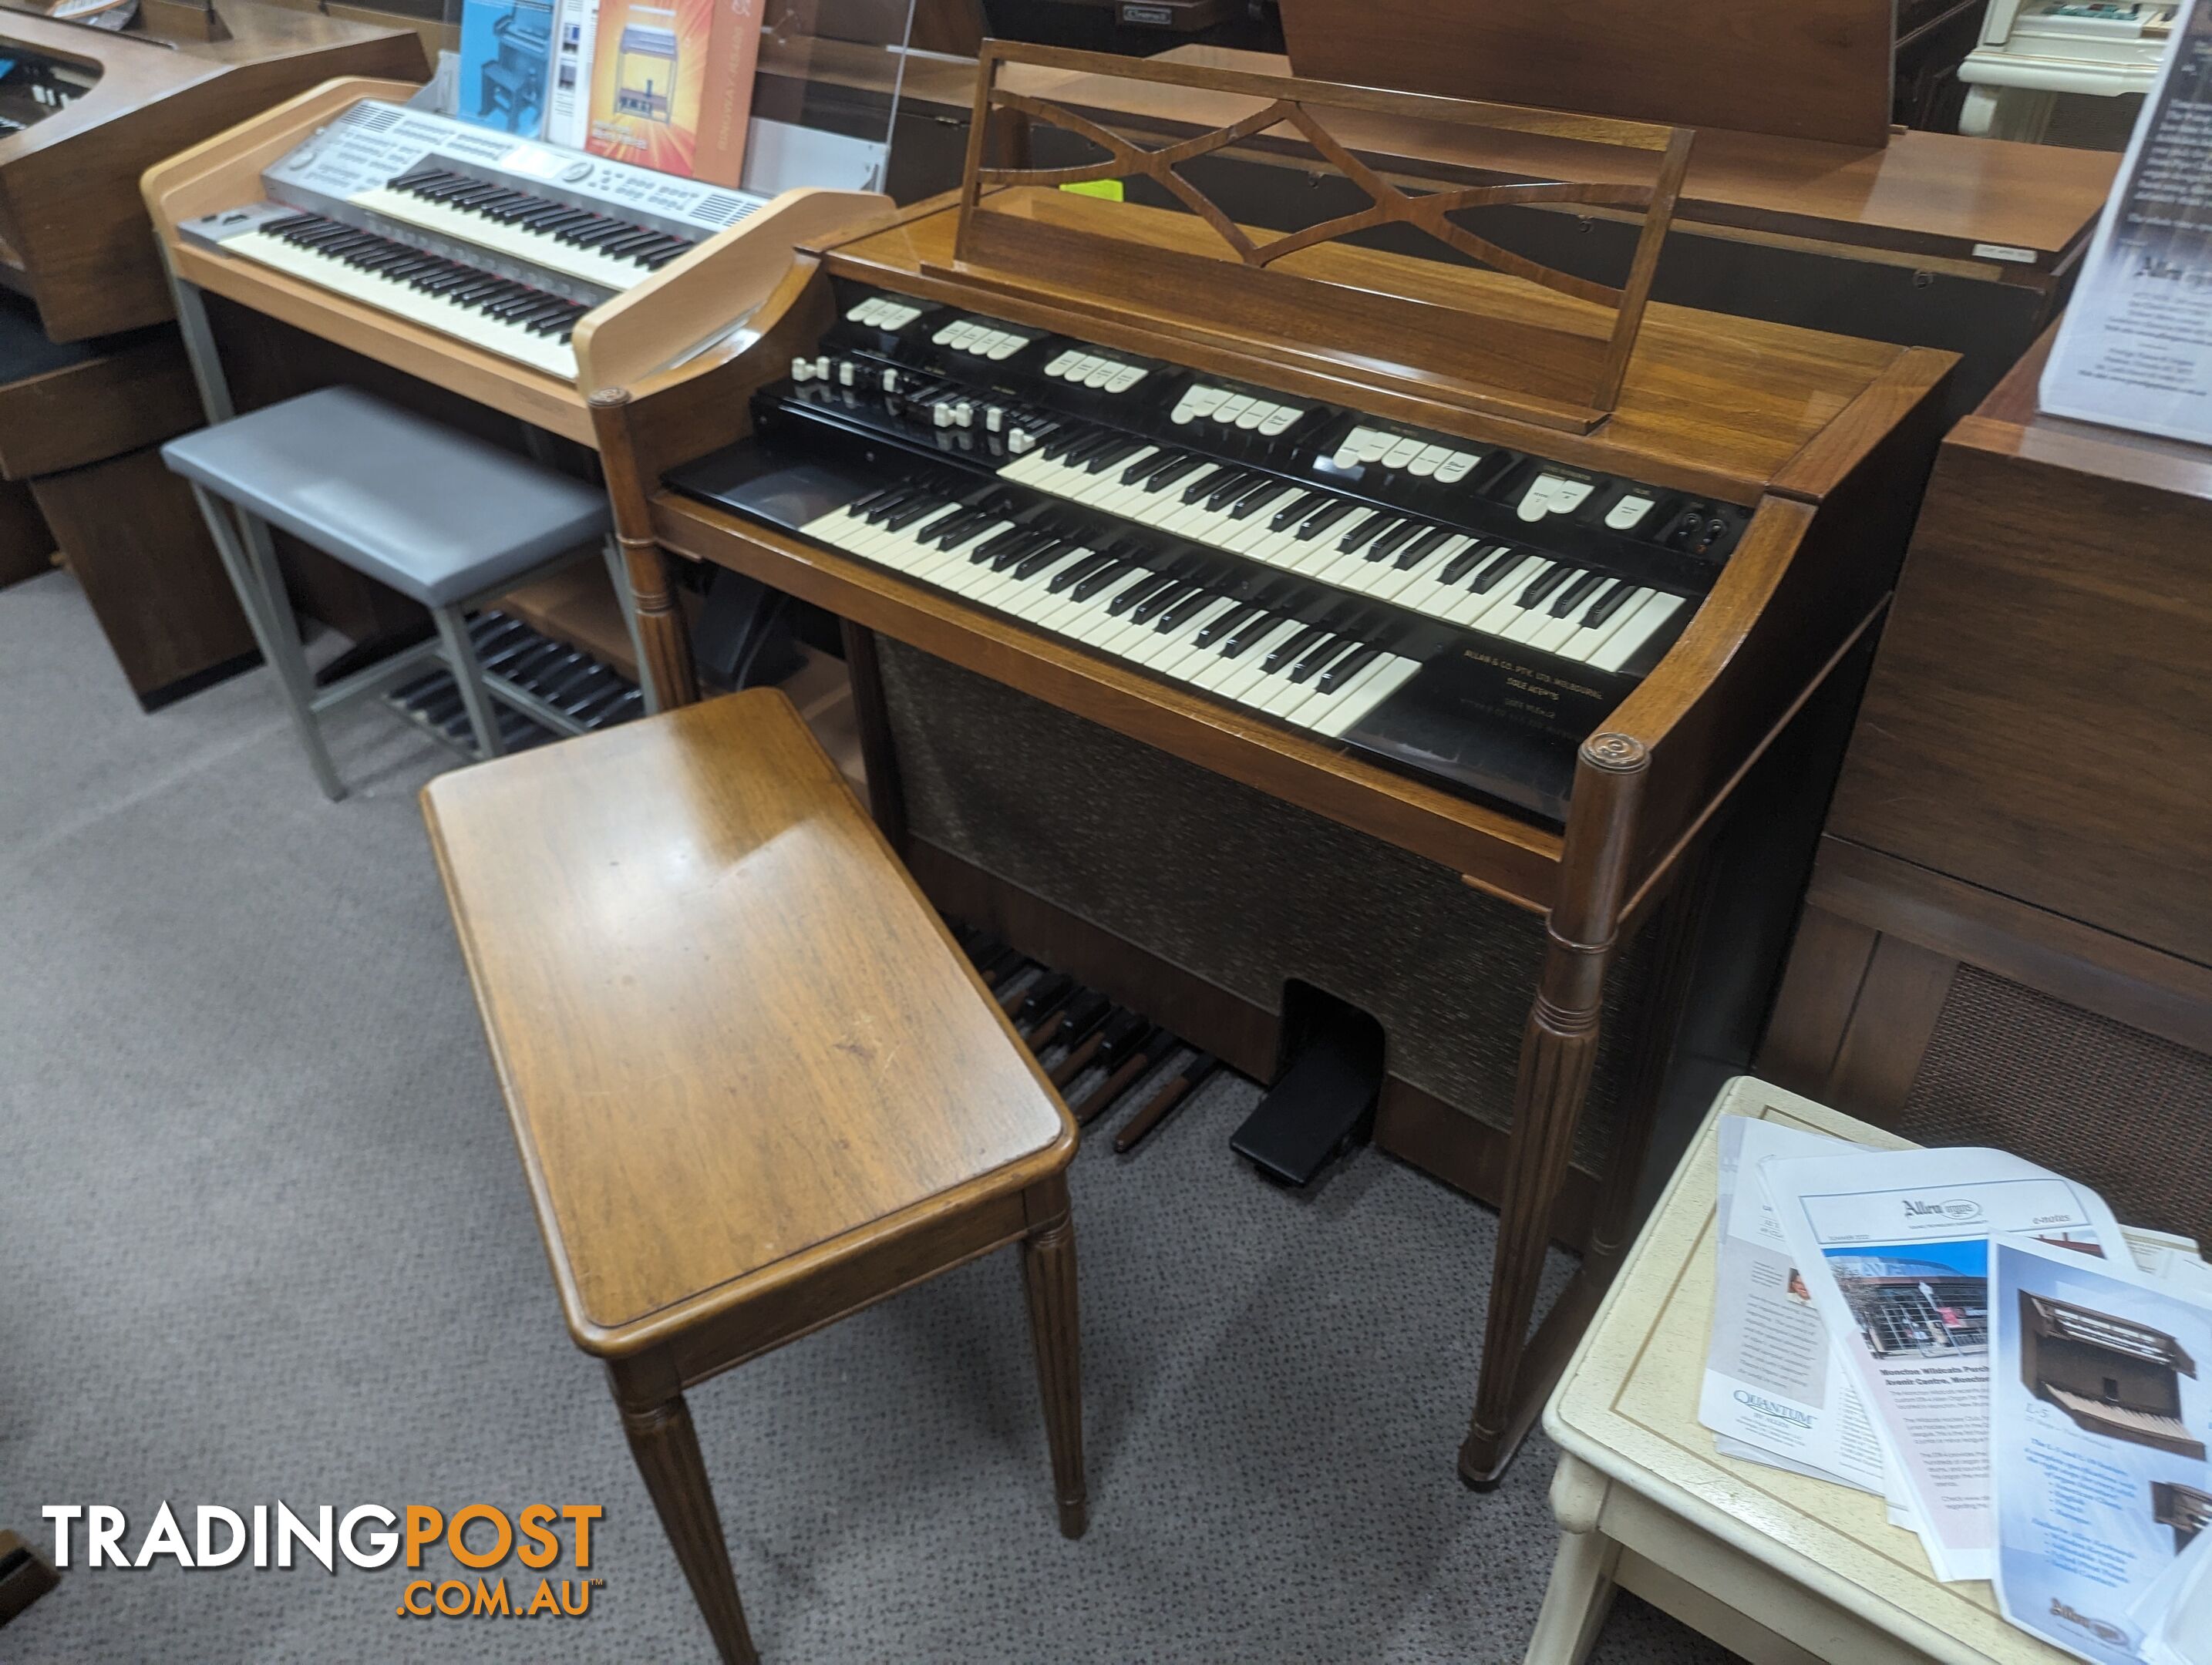 Hammond M100 Series Tone Wheel Organ - M-111, tradition style in walnut.